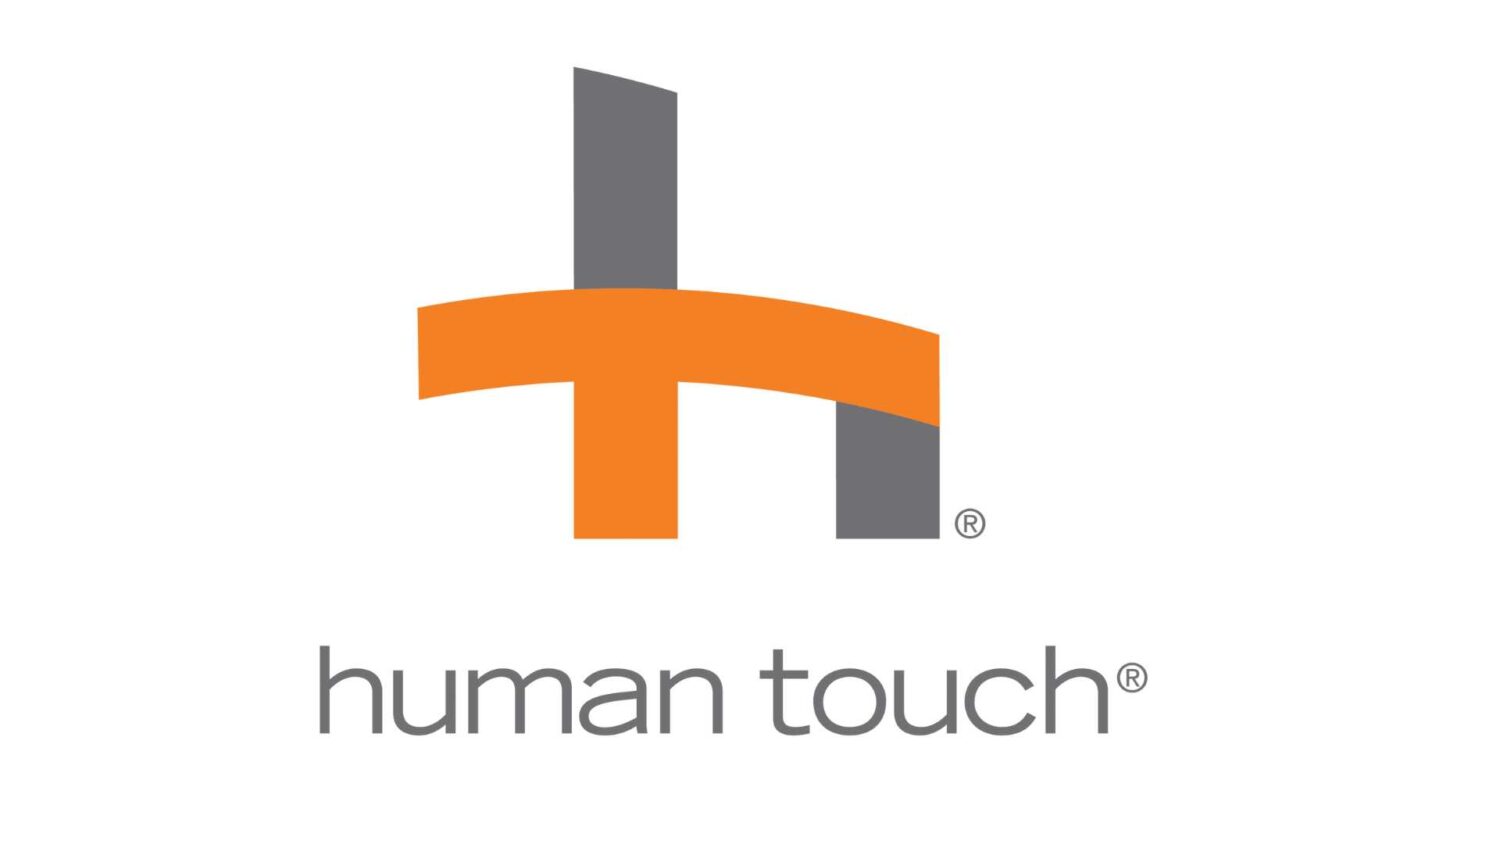 human touch logo.